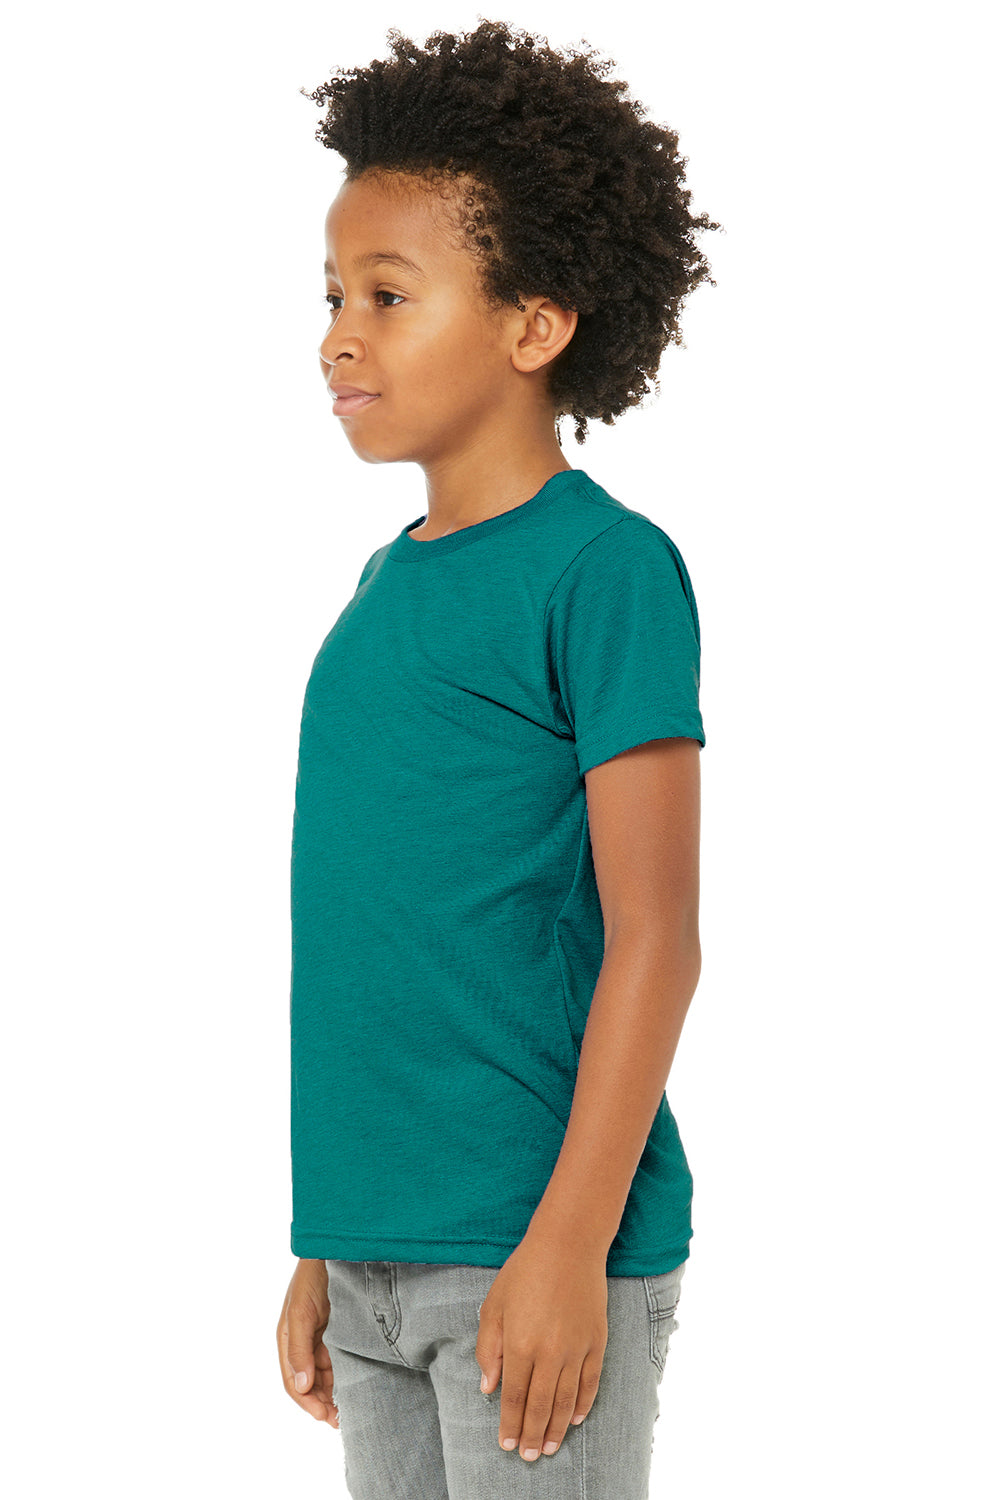 Bella + Canvas 3413Y Youth Short Sleeve Crewneck T-Shirt Teal Green Model 3Q